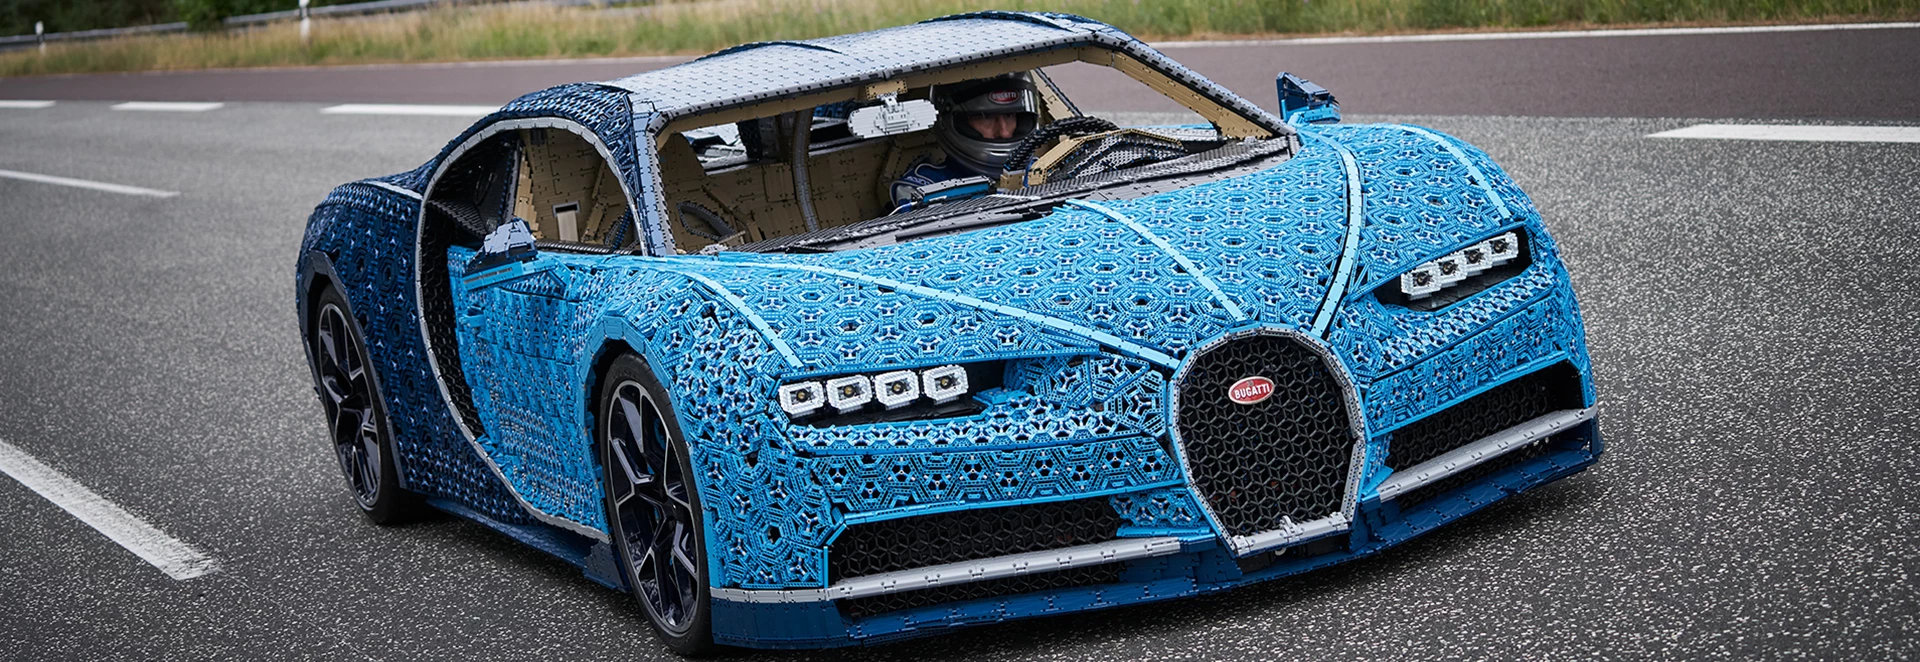 LEGO builds working full-size Bugatti Chiron model